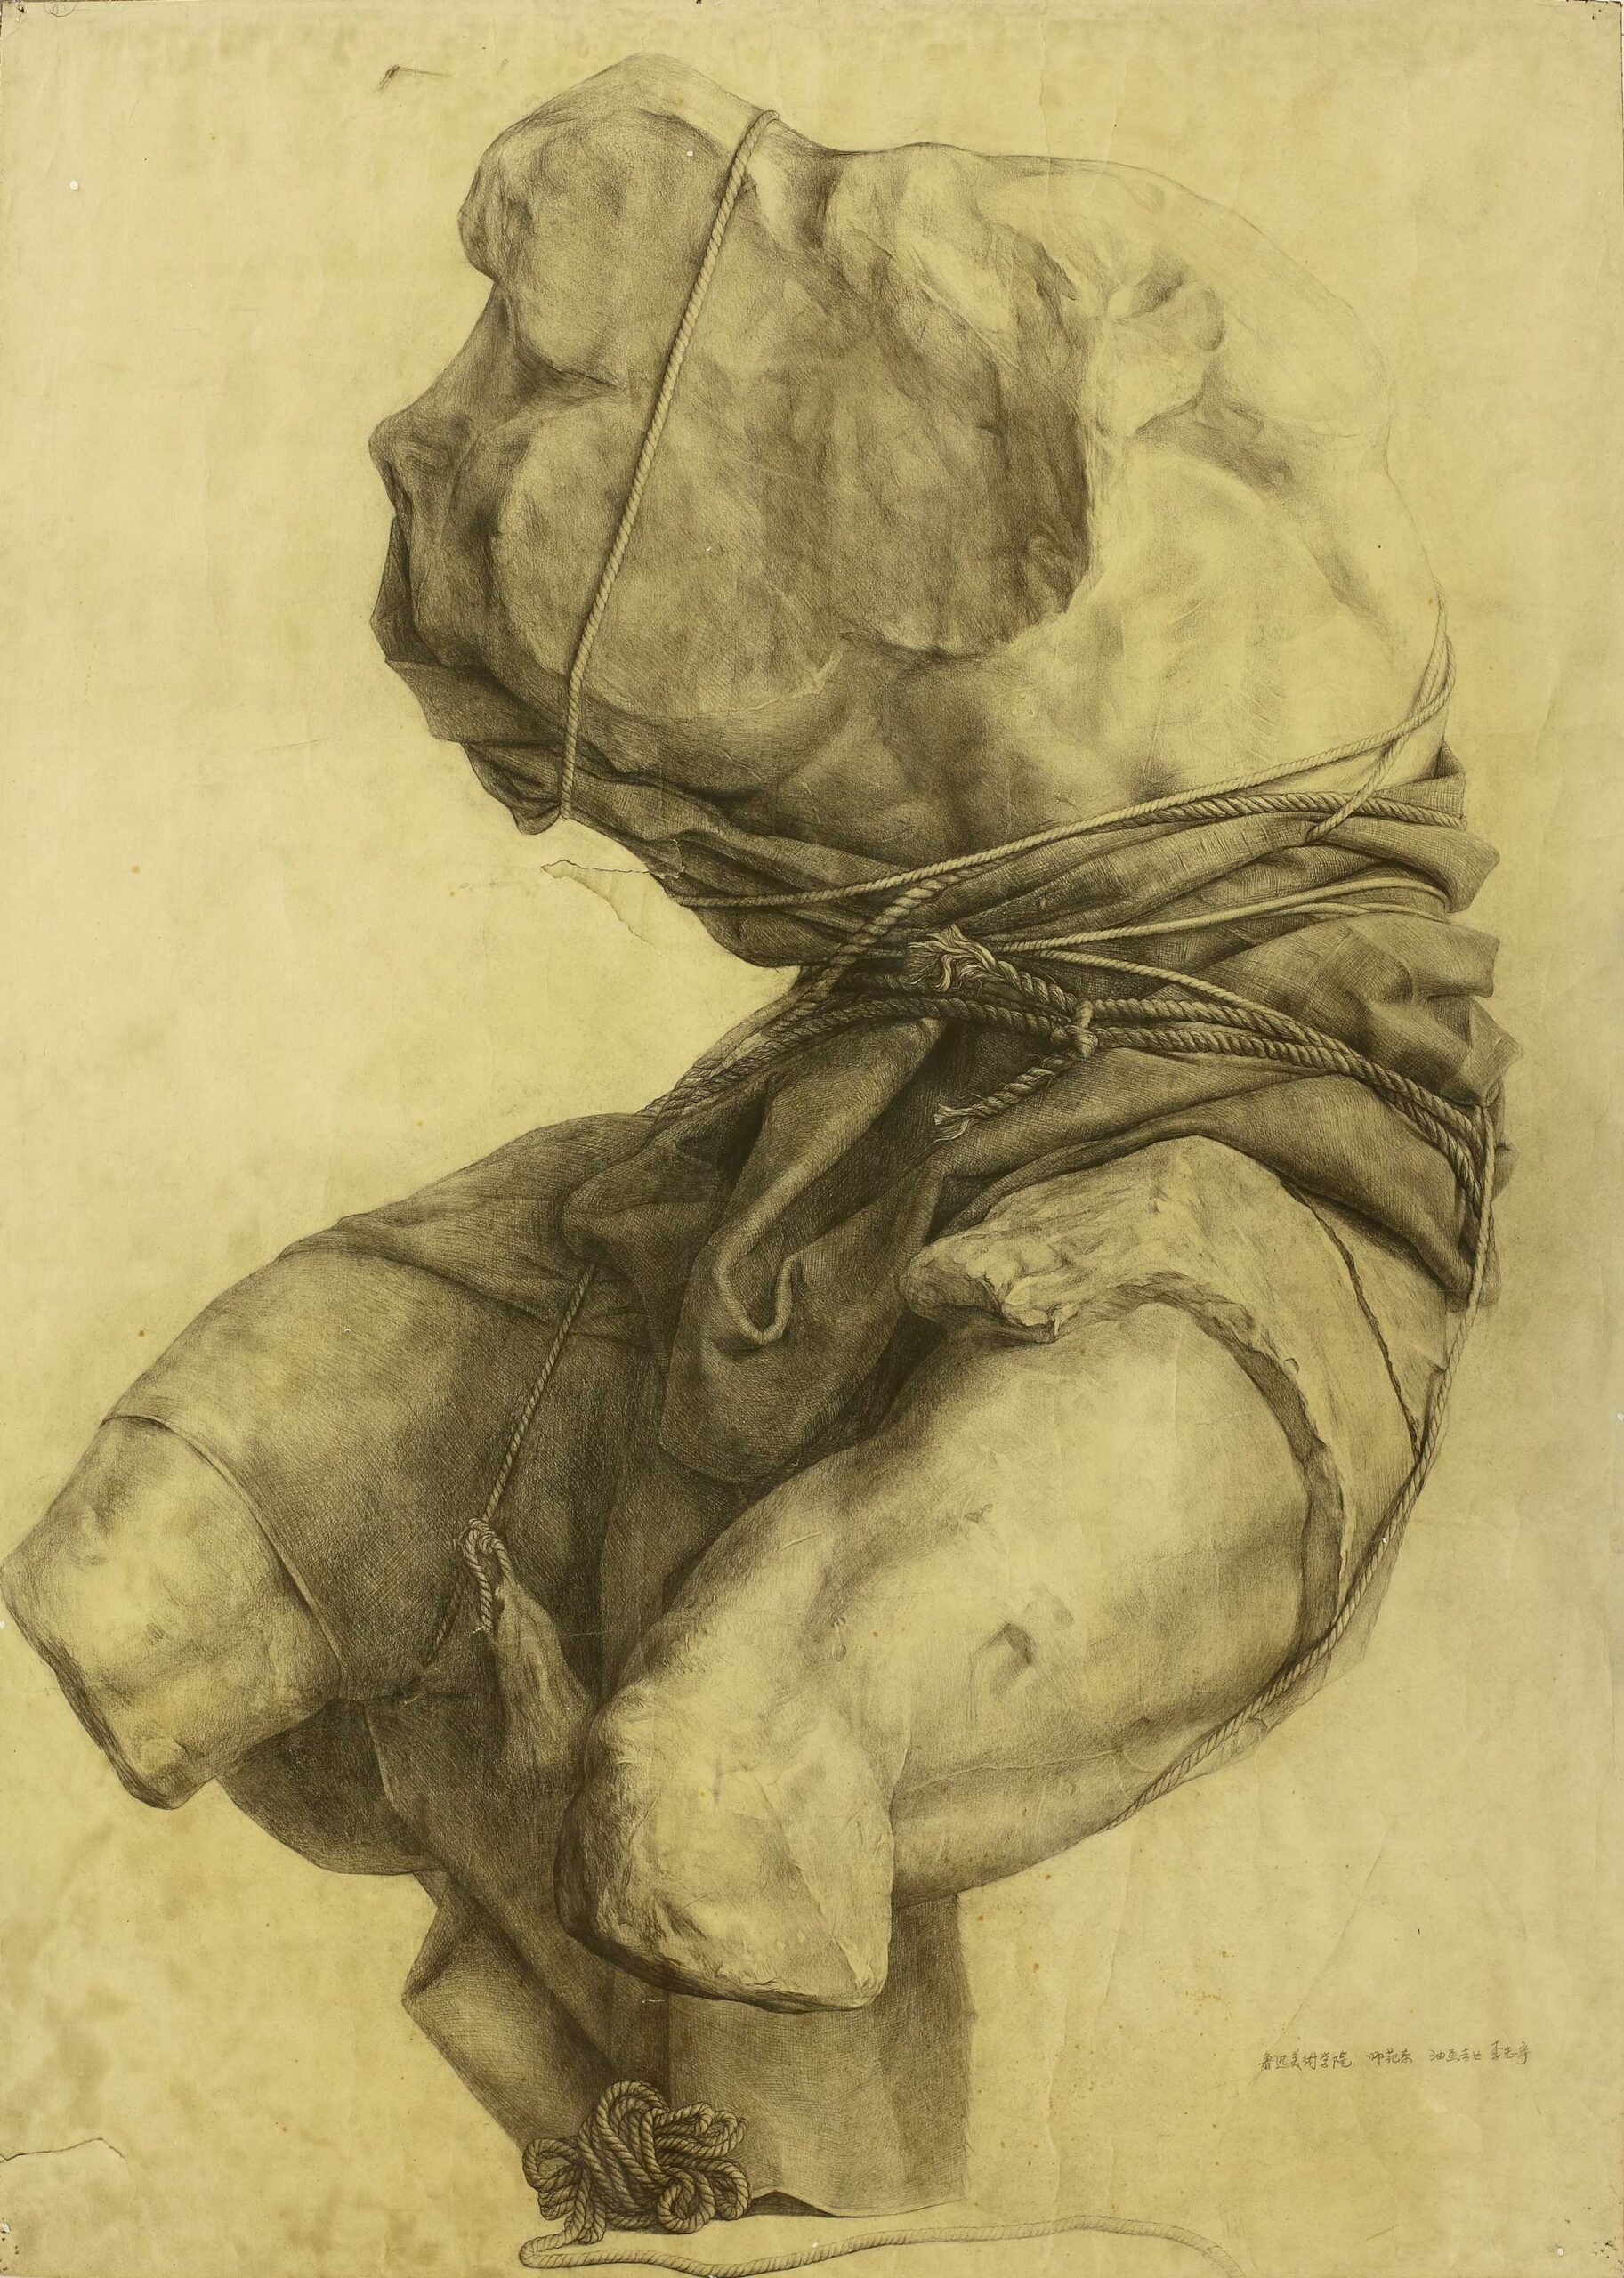 Academic drawings - Li Zhiyu (Lu Xun Art Academy), "Torso," 1996, pencil on paper, 42 1/8 x 29 1/2 in.